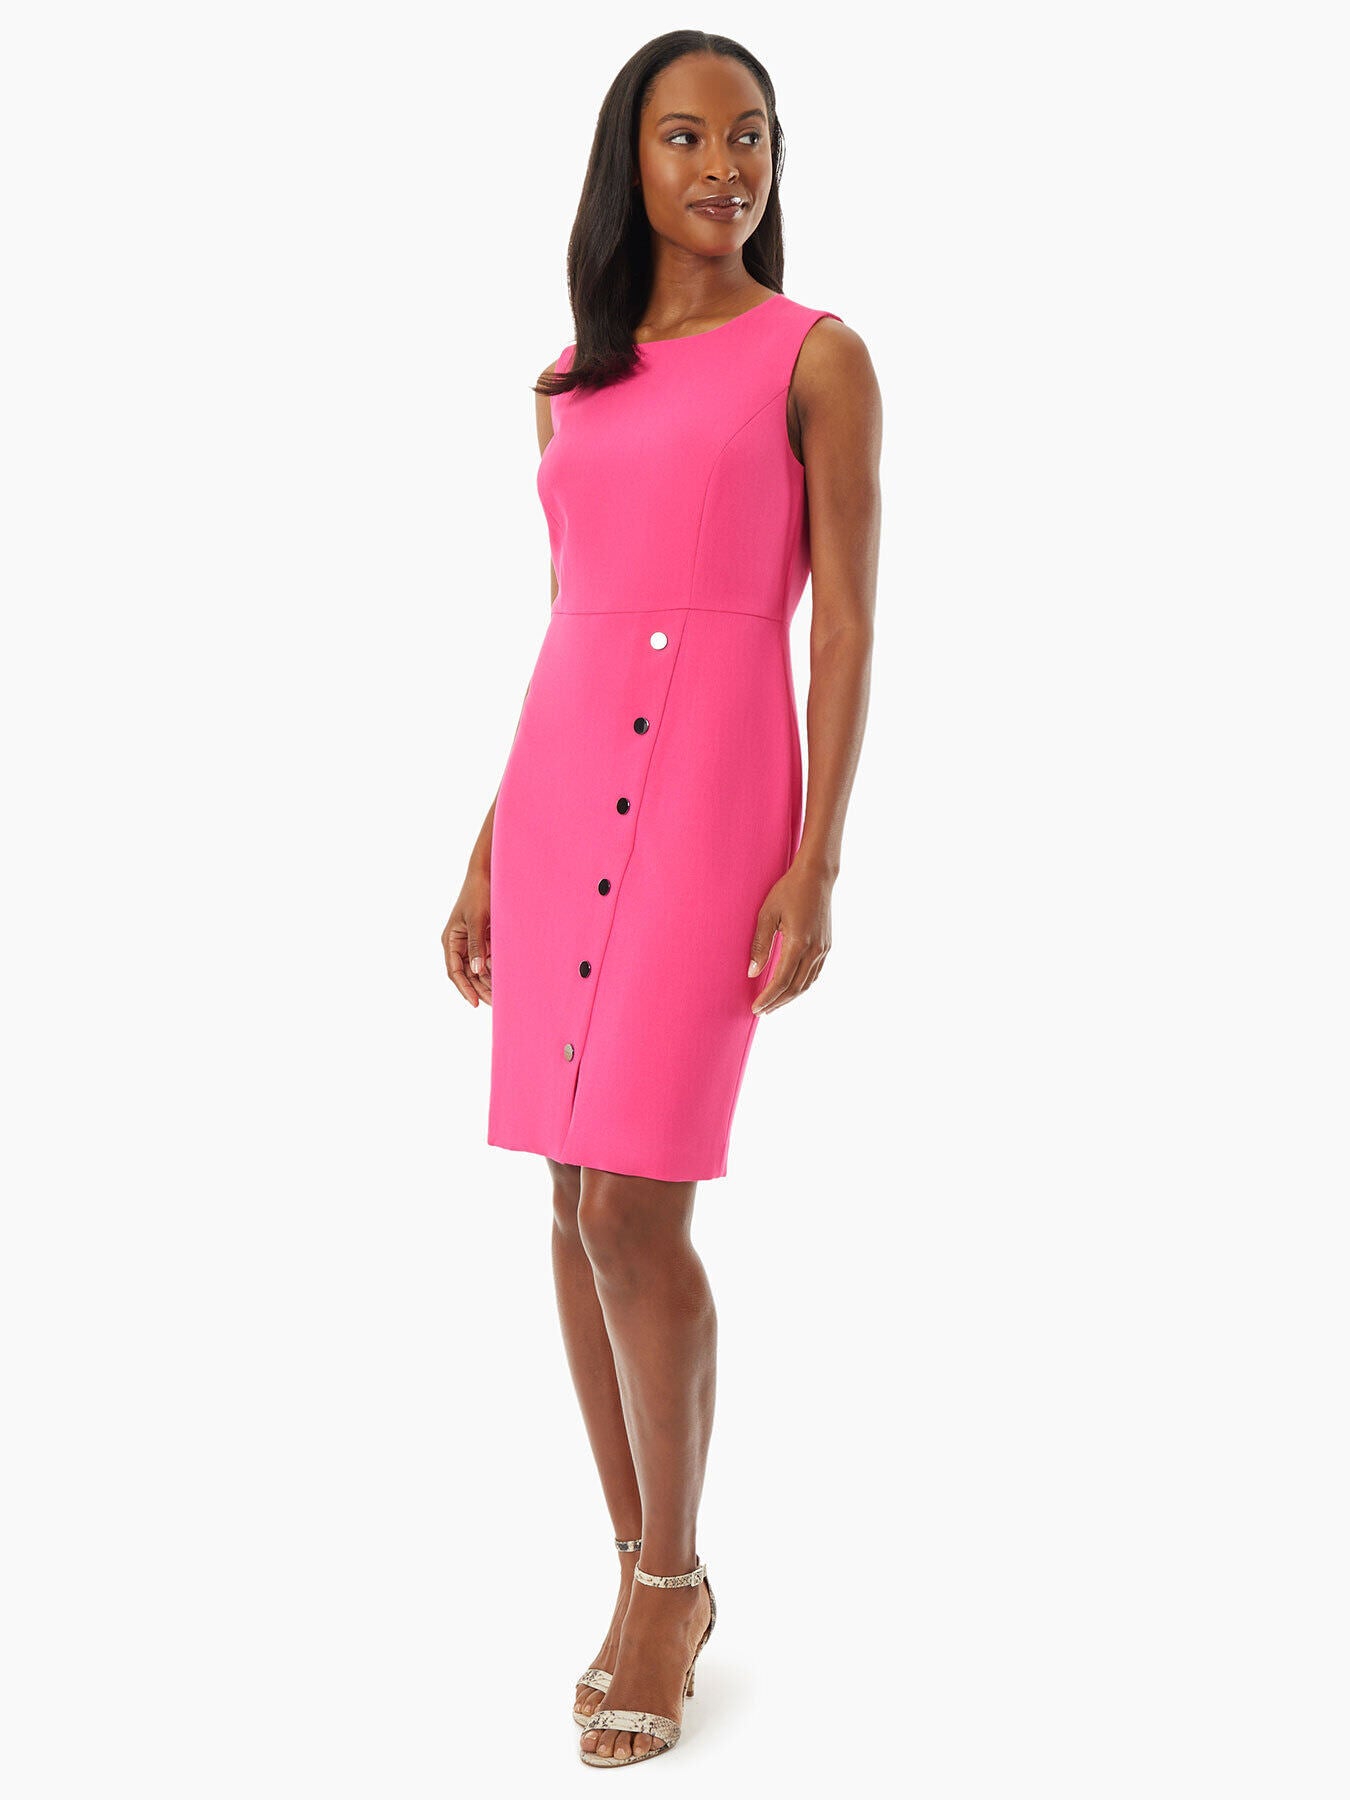 Pink Sleeveless Dress - Stretch Sheath Dress